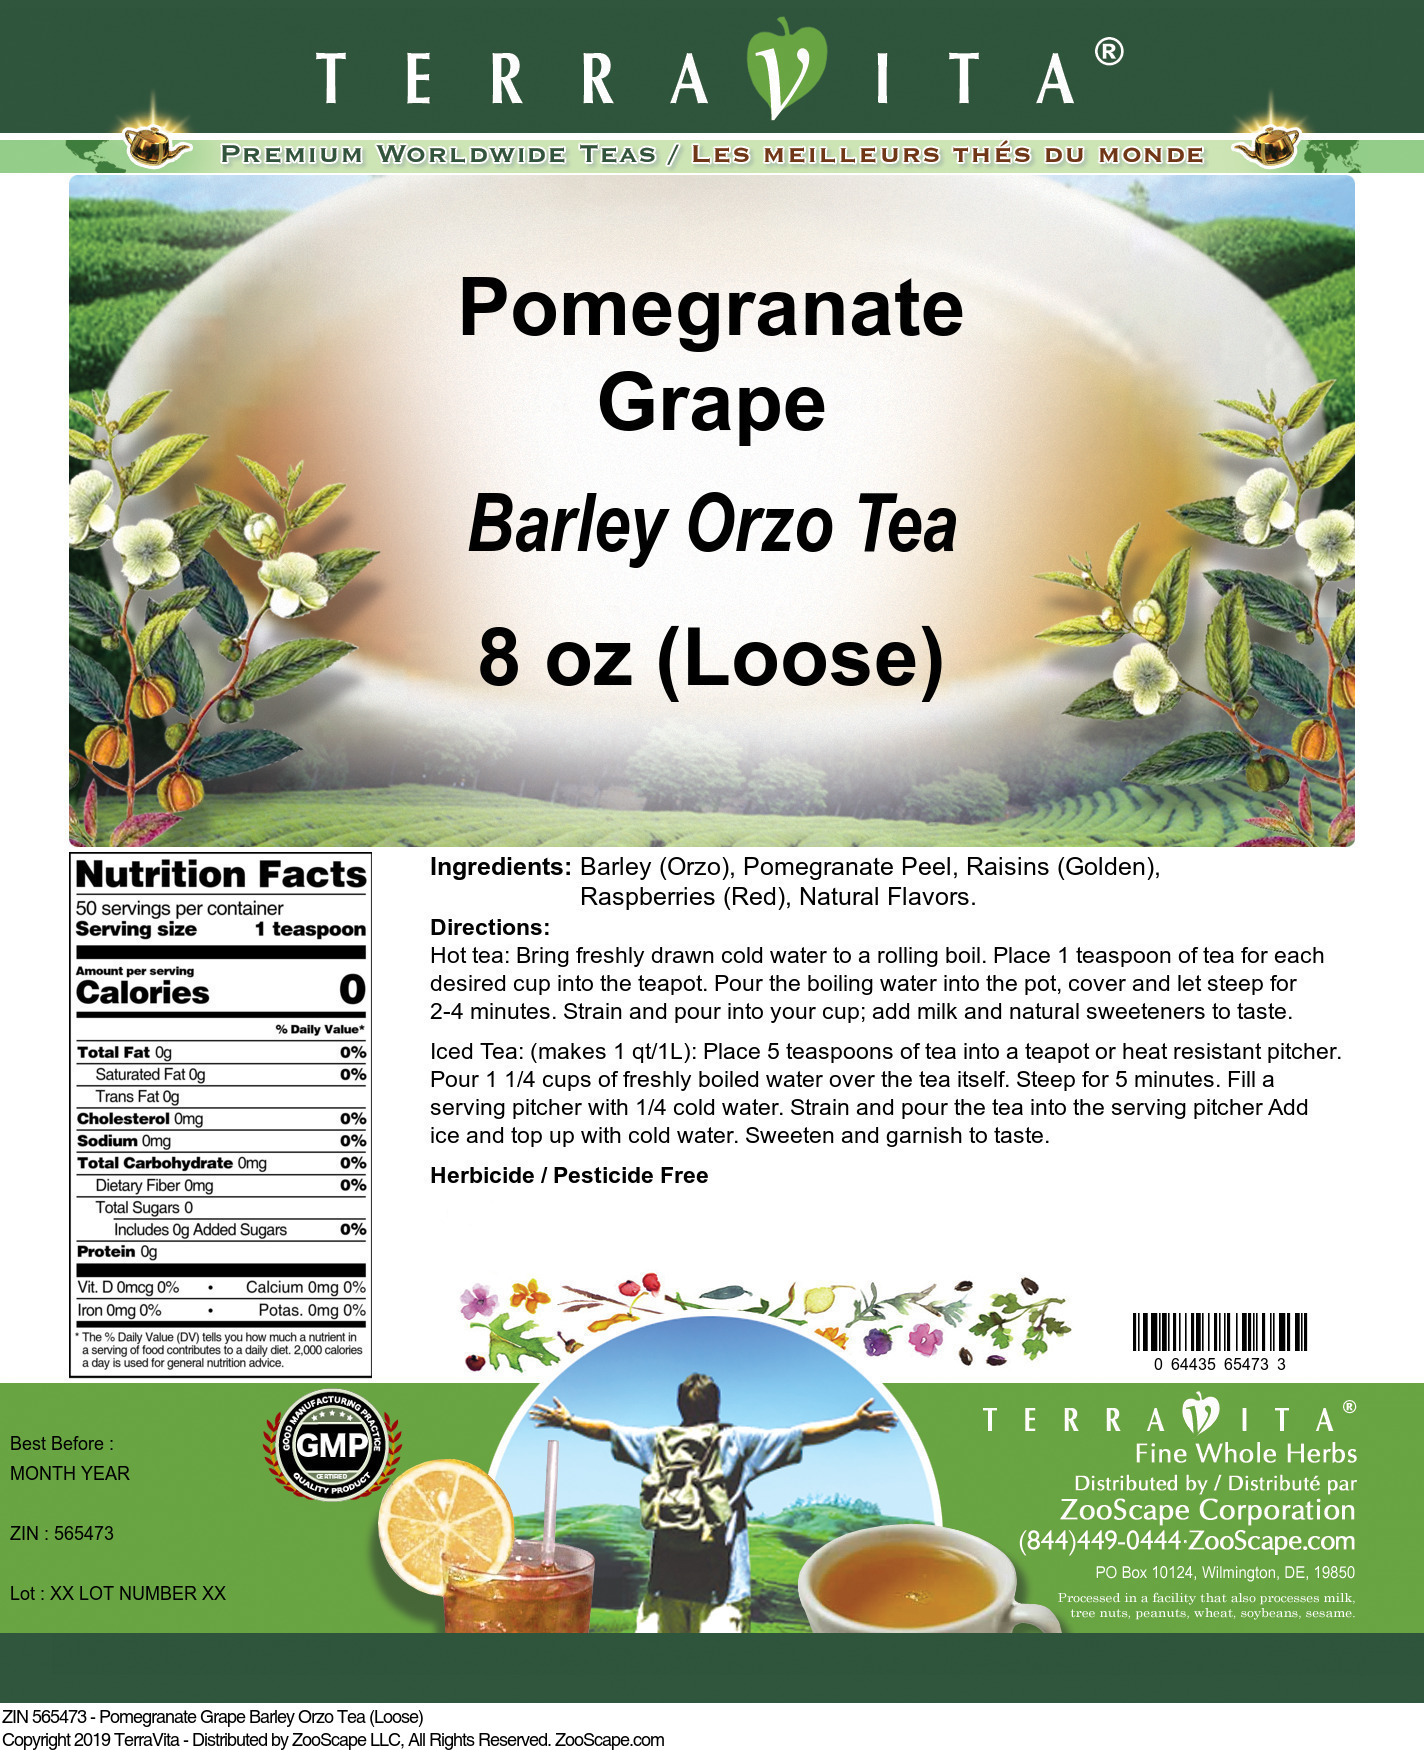 Pomegranate Grape Barley Orzo Tea (Loose) - Label